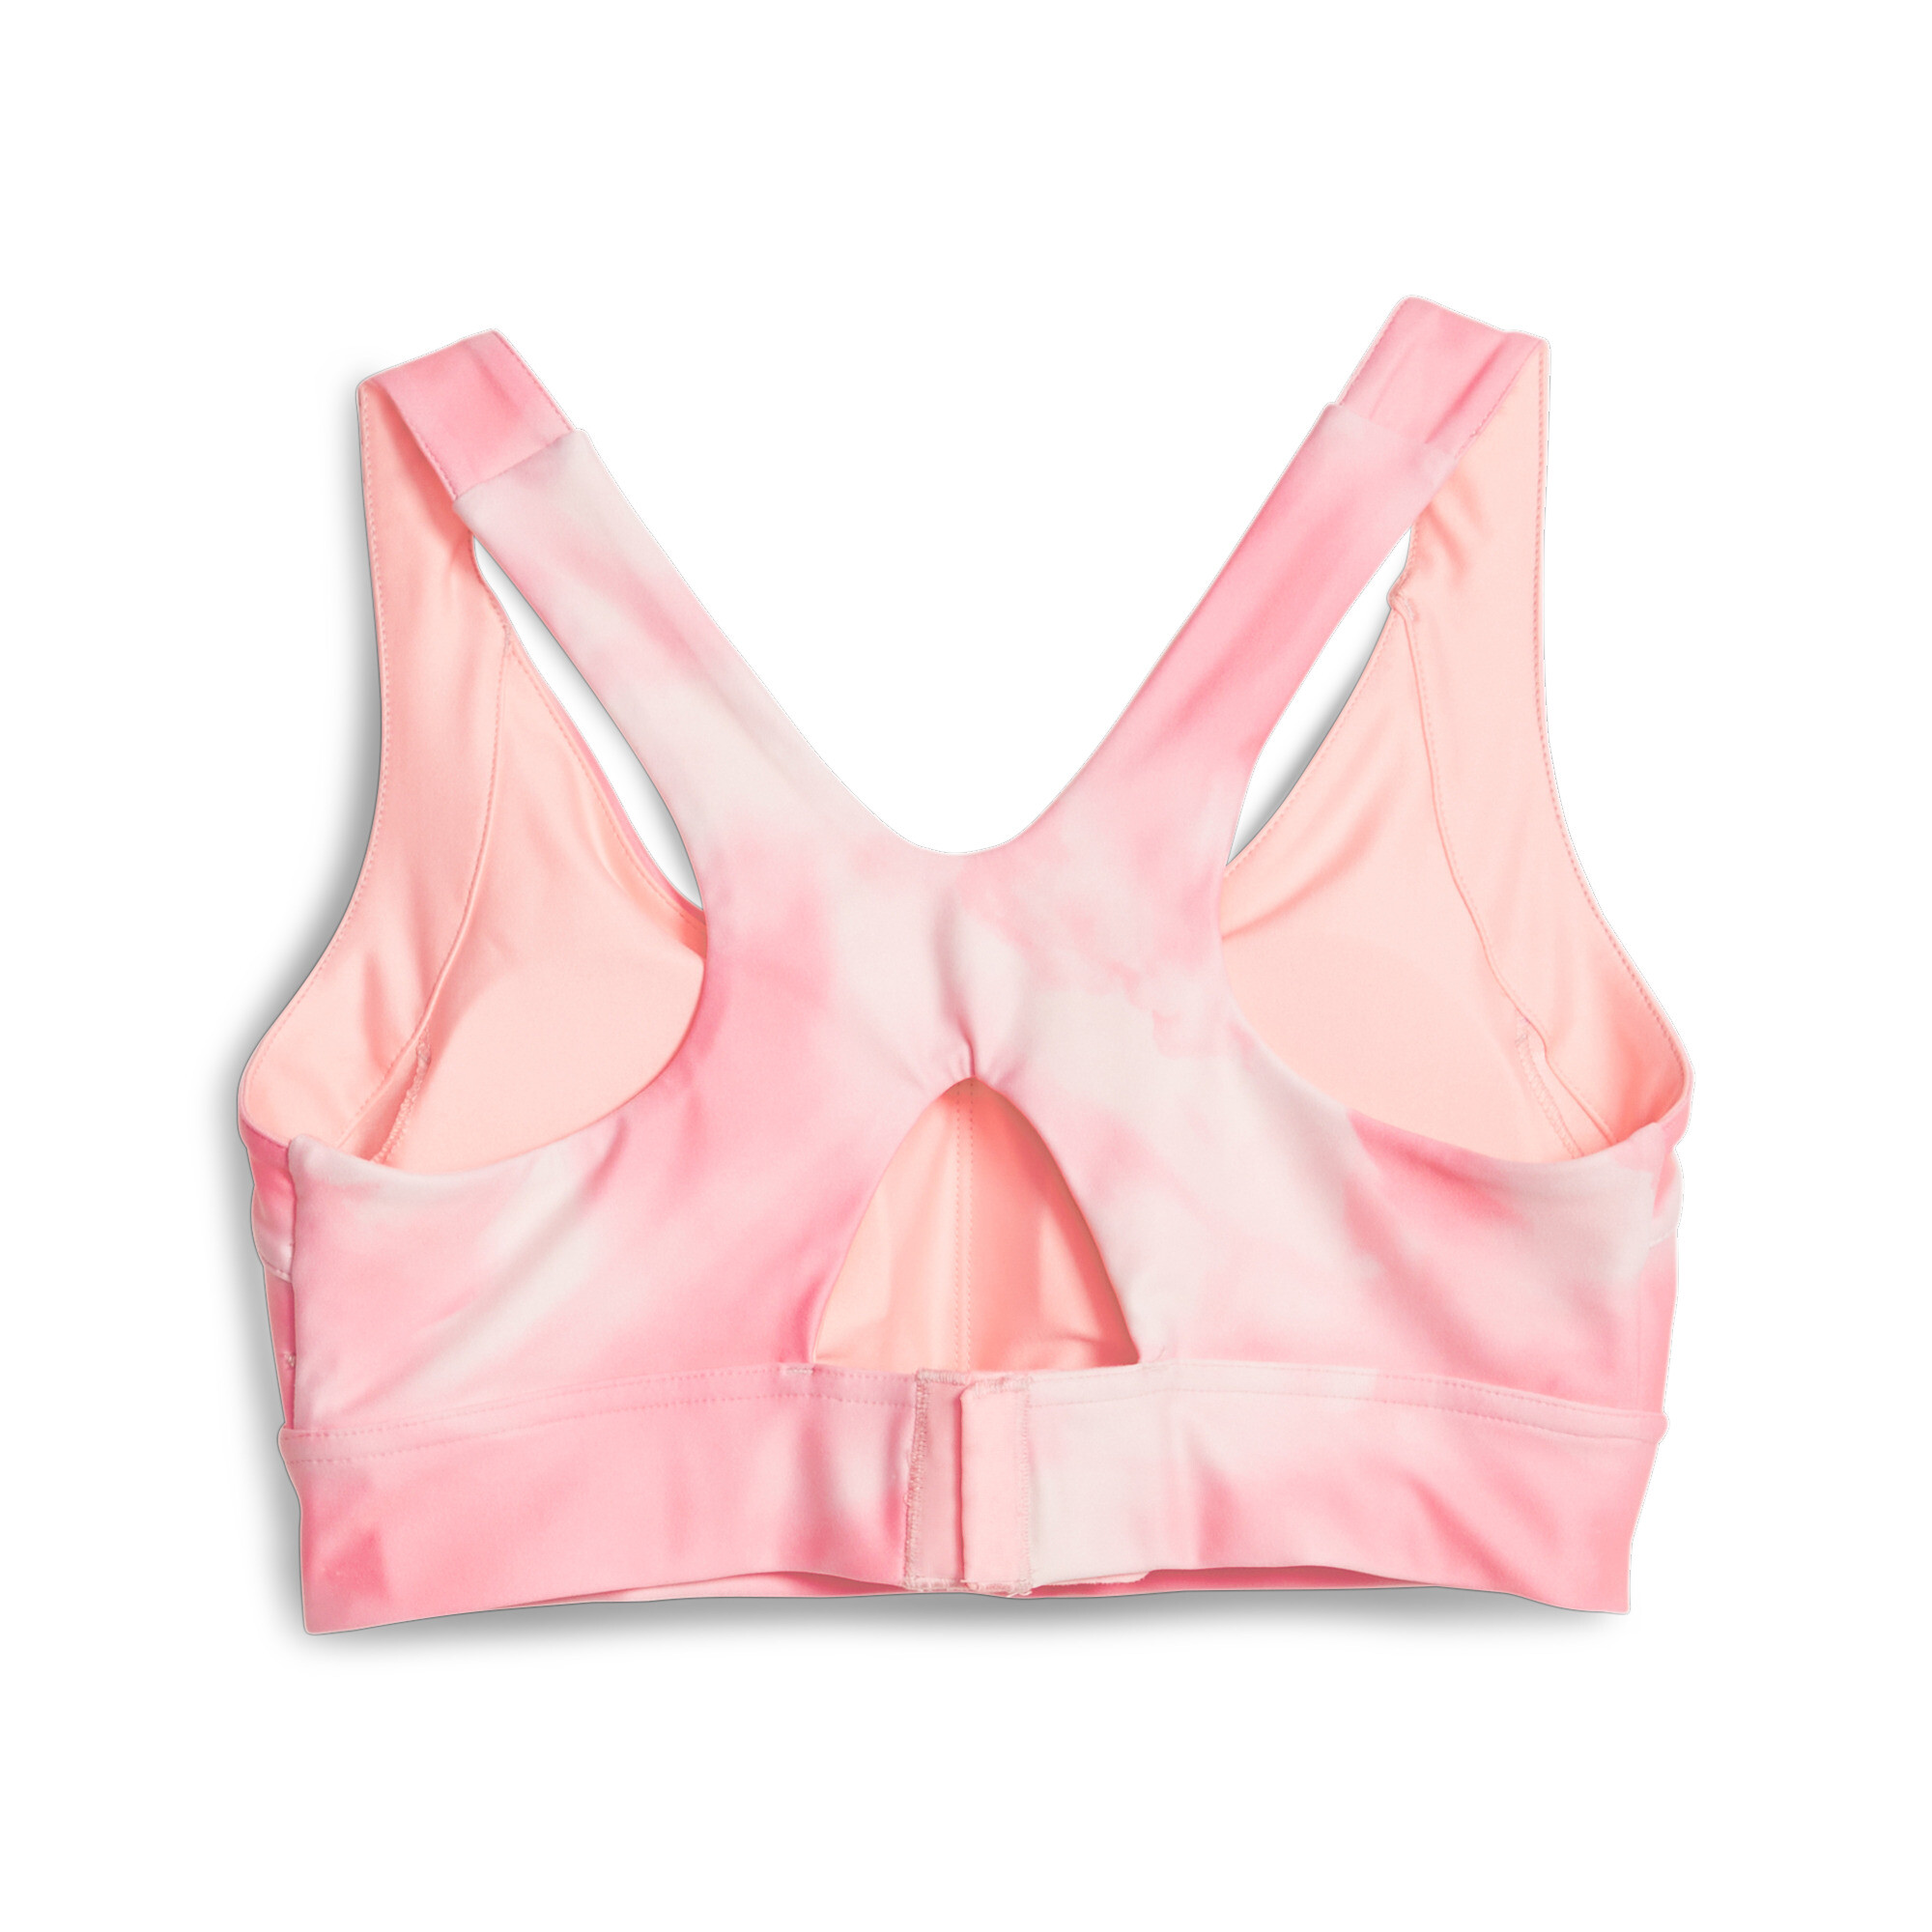 Women's PUMA Printed Ultraform Running Bra Top Women In Pink, Size Large